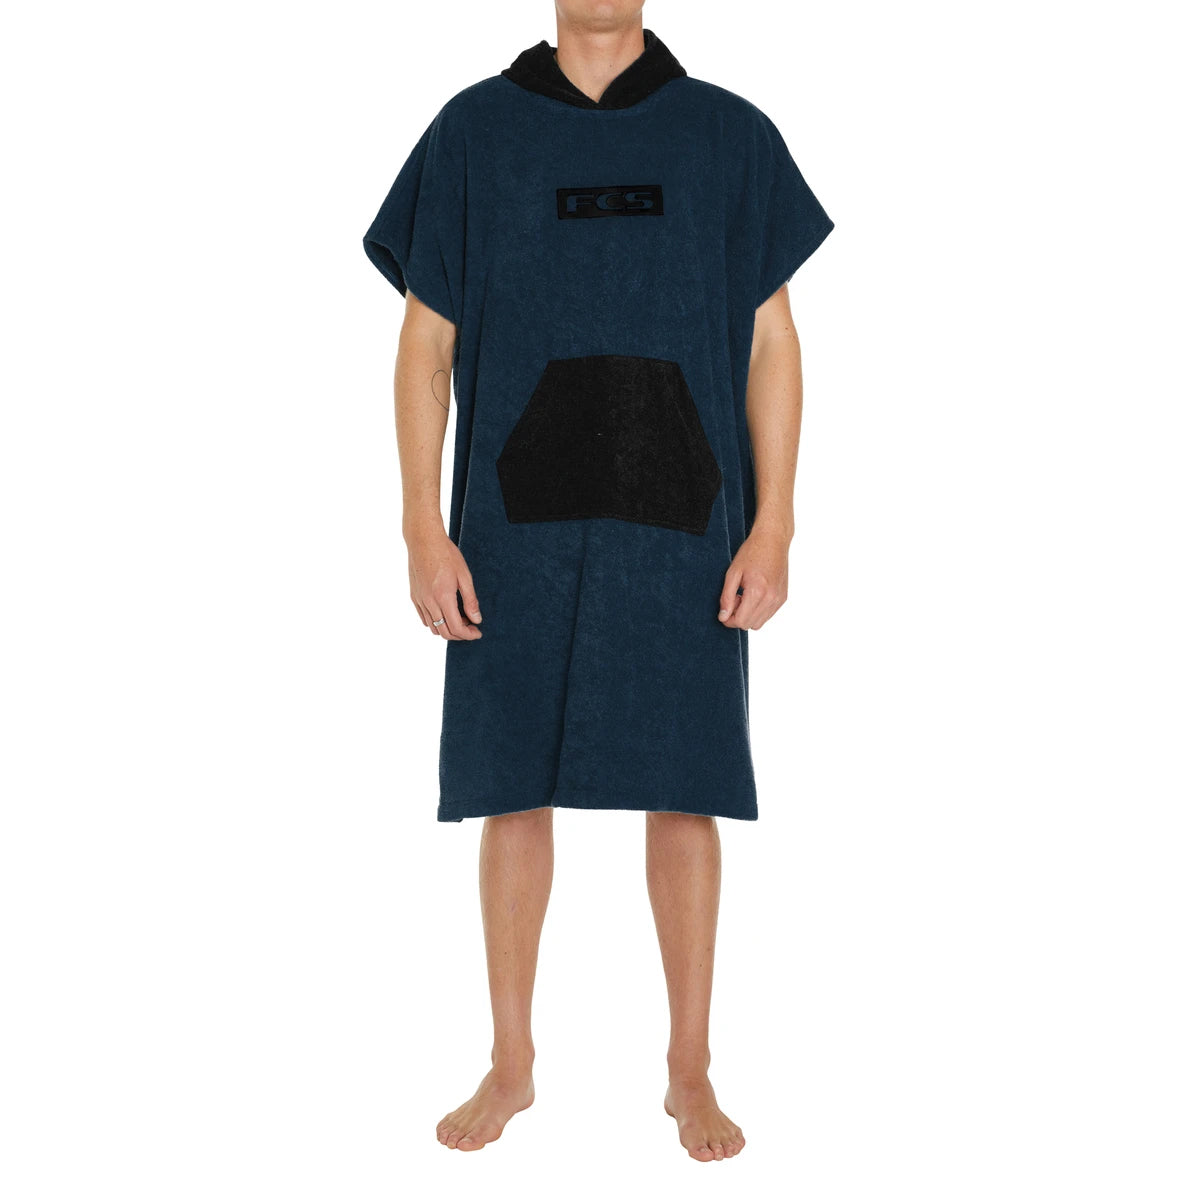 FCS Towel Poncho Navy-Black